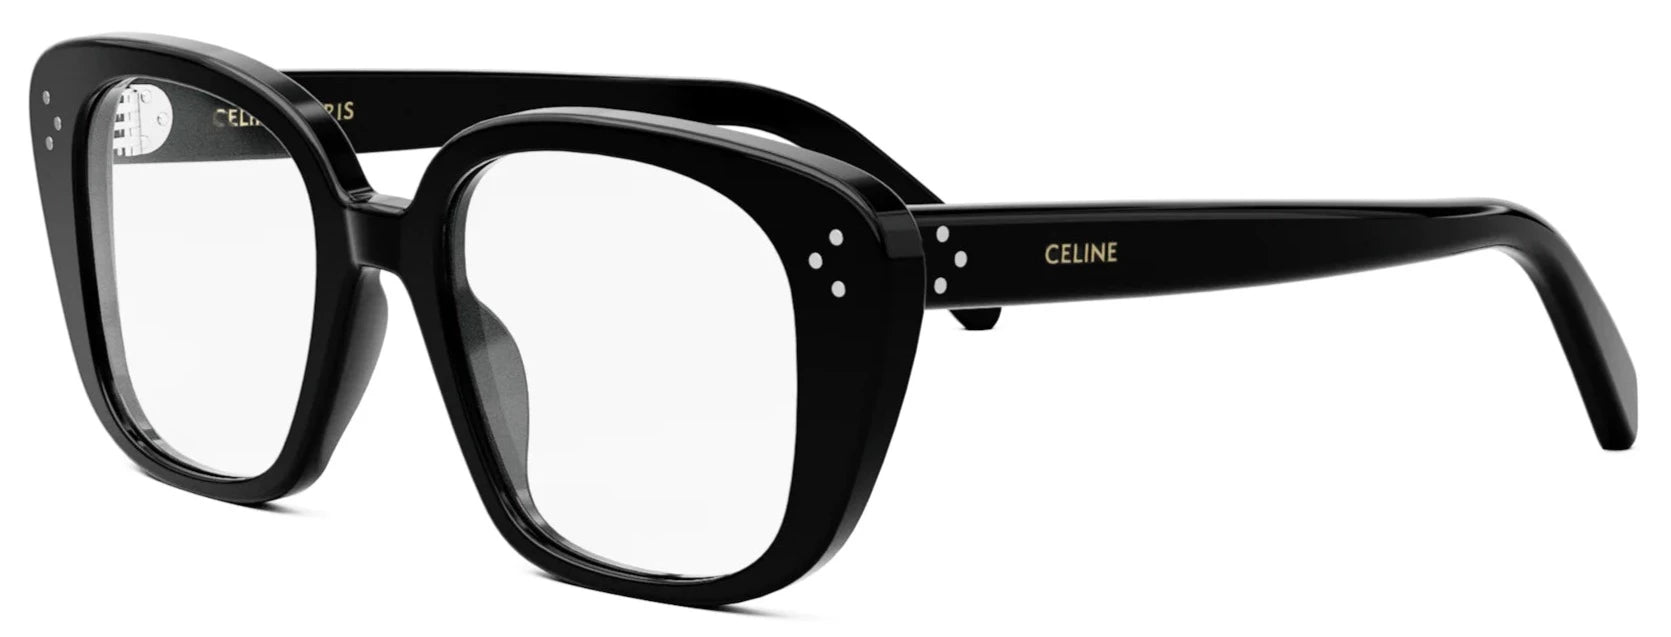 Alexander Daas - Celine CL50136I Eyeglasses - Black - Side View